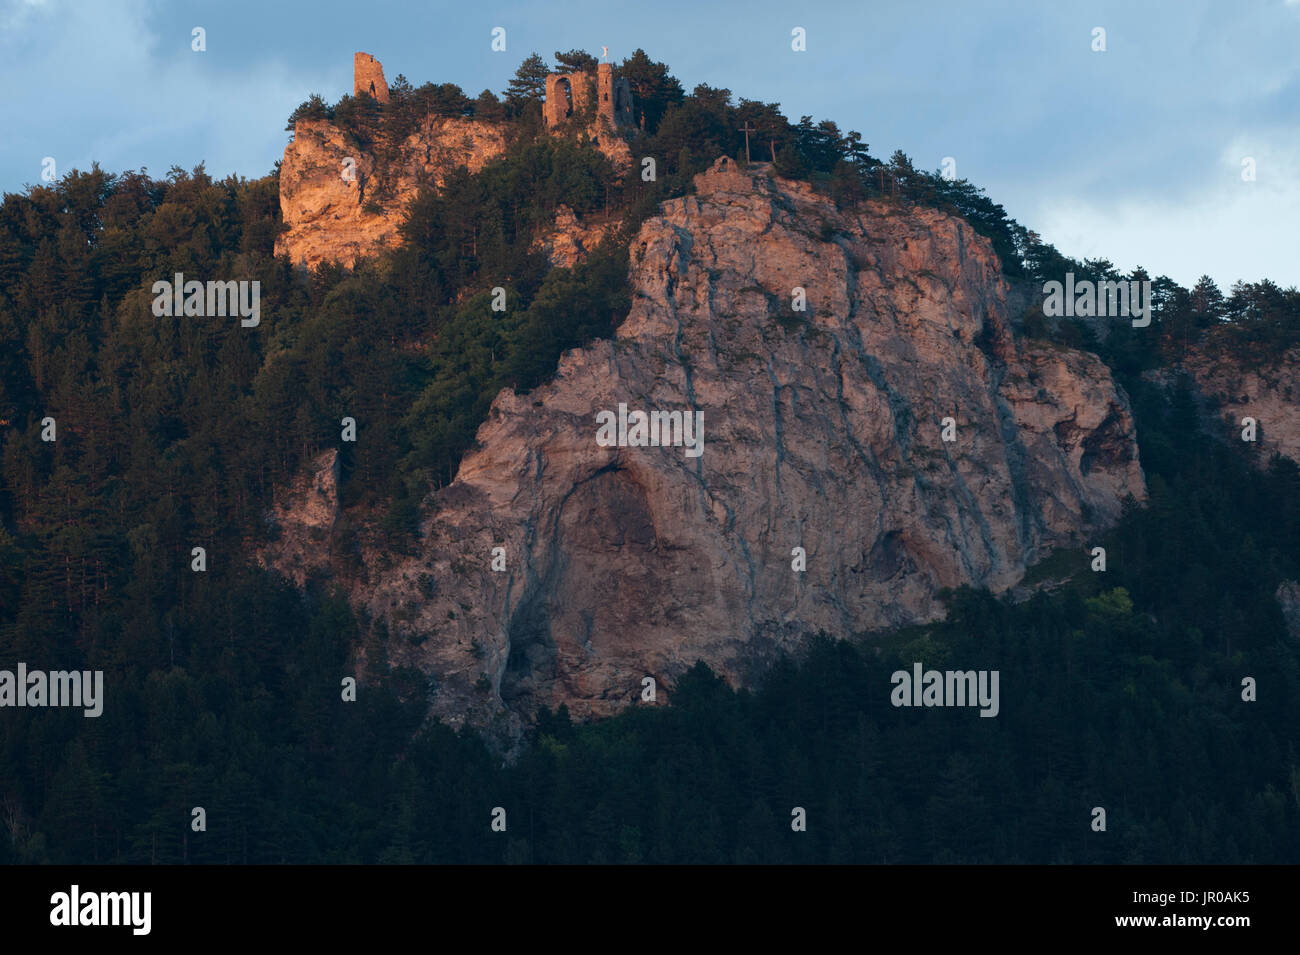 Ruins of a Castle on a Rockface in Nature Park Seebenstein Turkensturz in Gleissenfeld, Austria. 29 July 2016 © Wojciech Strozyk / Alamy Stock Photo Stock Photo